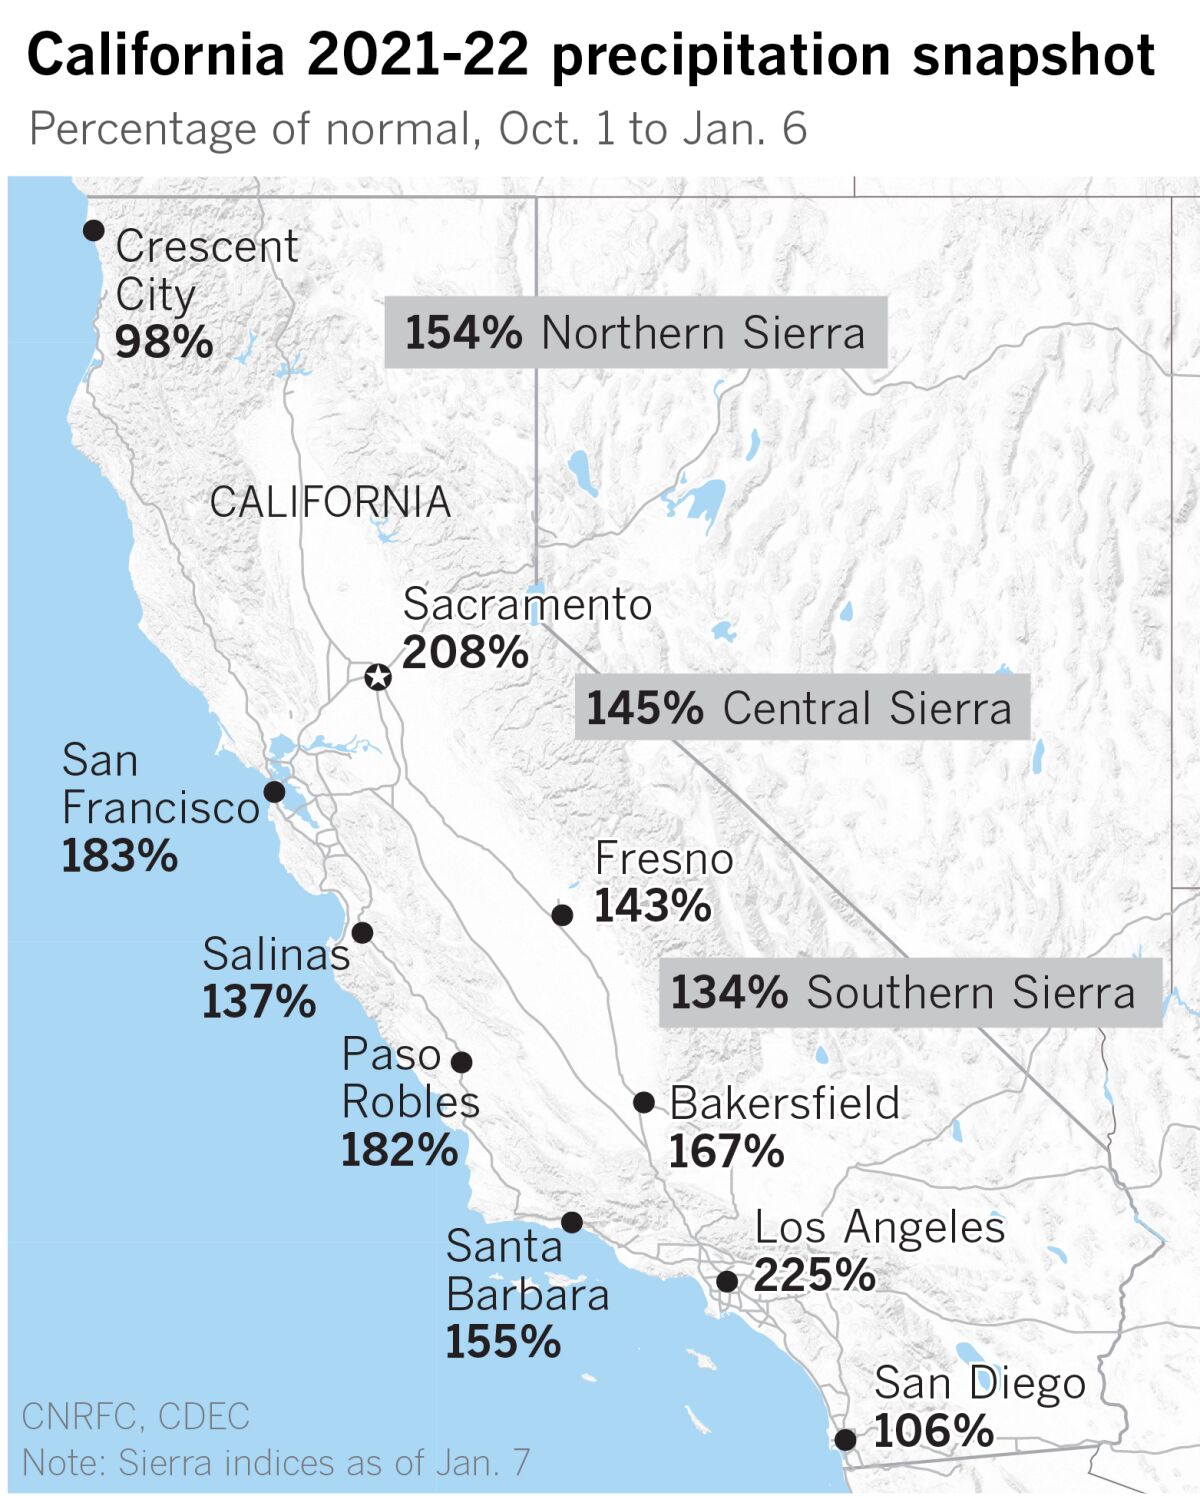 Map of California showing percentage of normal precipitation at various spots